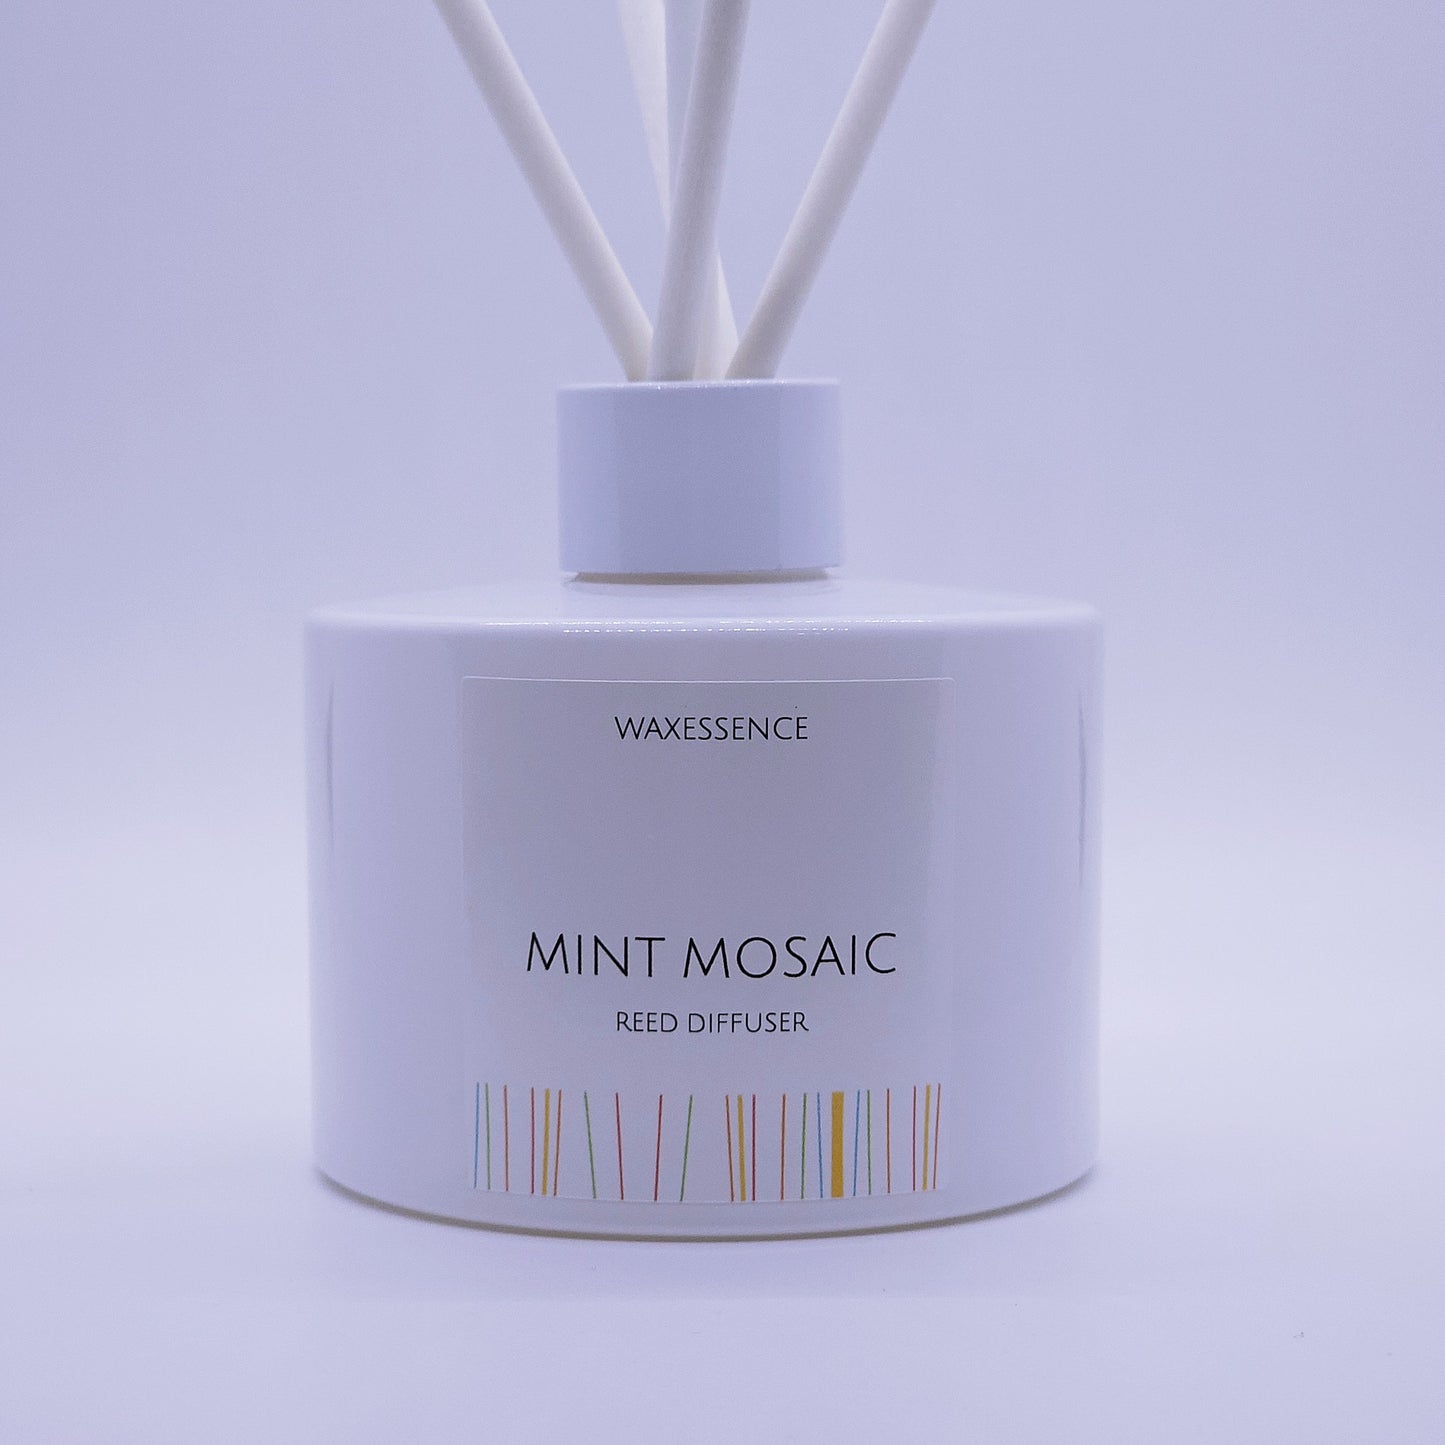 Mint Mosaic Reed Diffuser | Essenza Gloss White  | Aromatherapy Home Decor | Diffuser Oil | 6.8 fl. oz